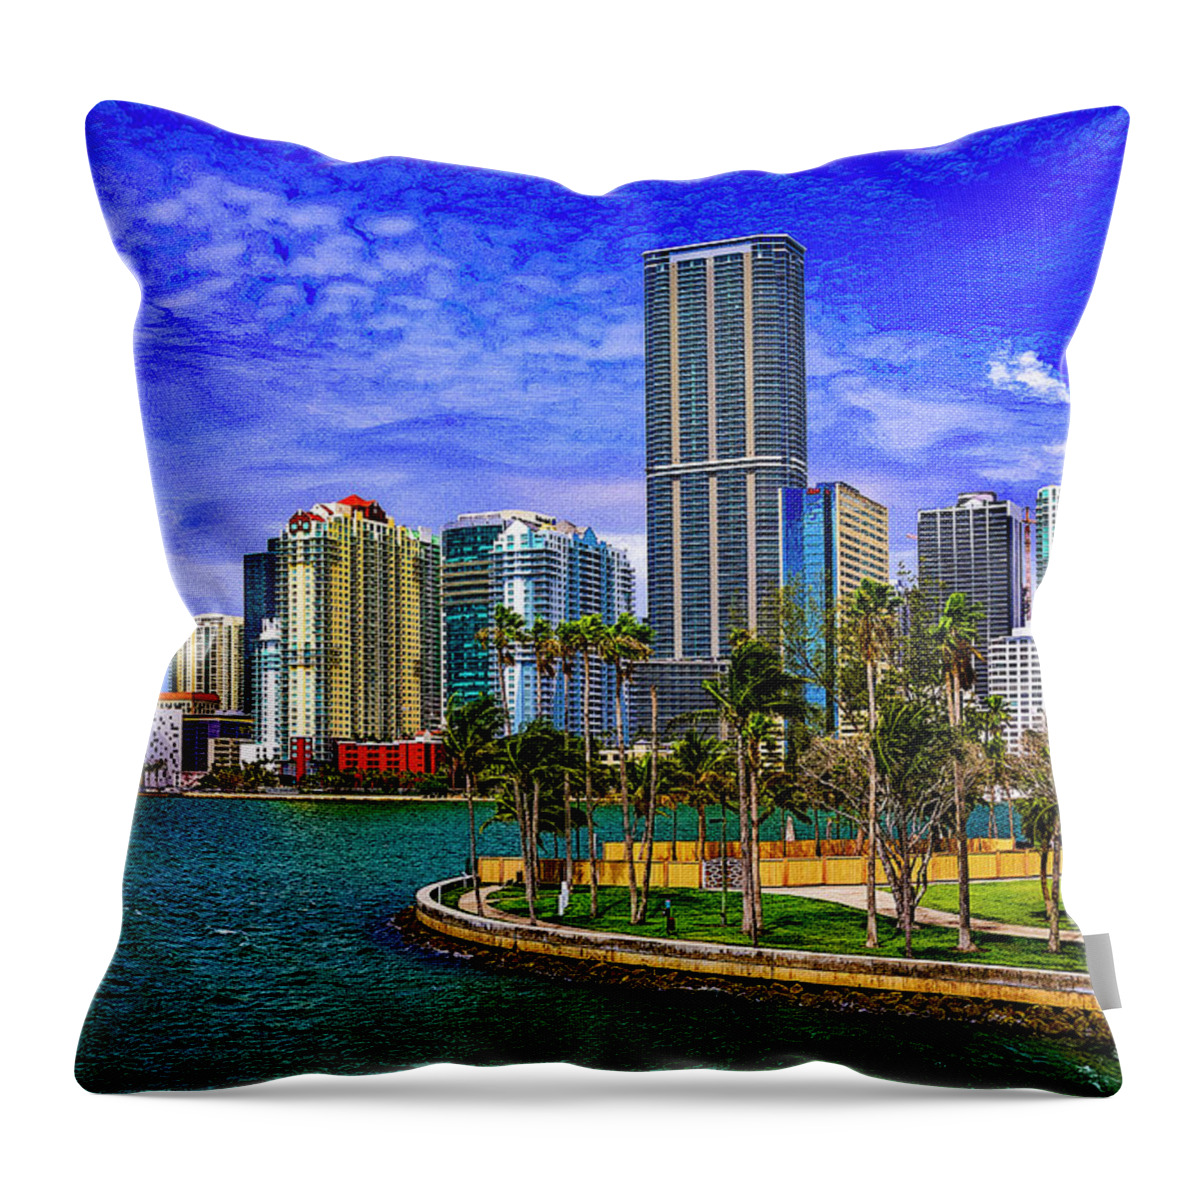 Downtown Miami Throw Pillow featuring the digital art Downtown Miami by SnapHappy Photos